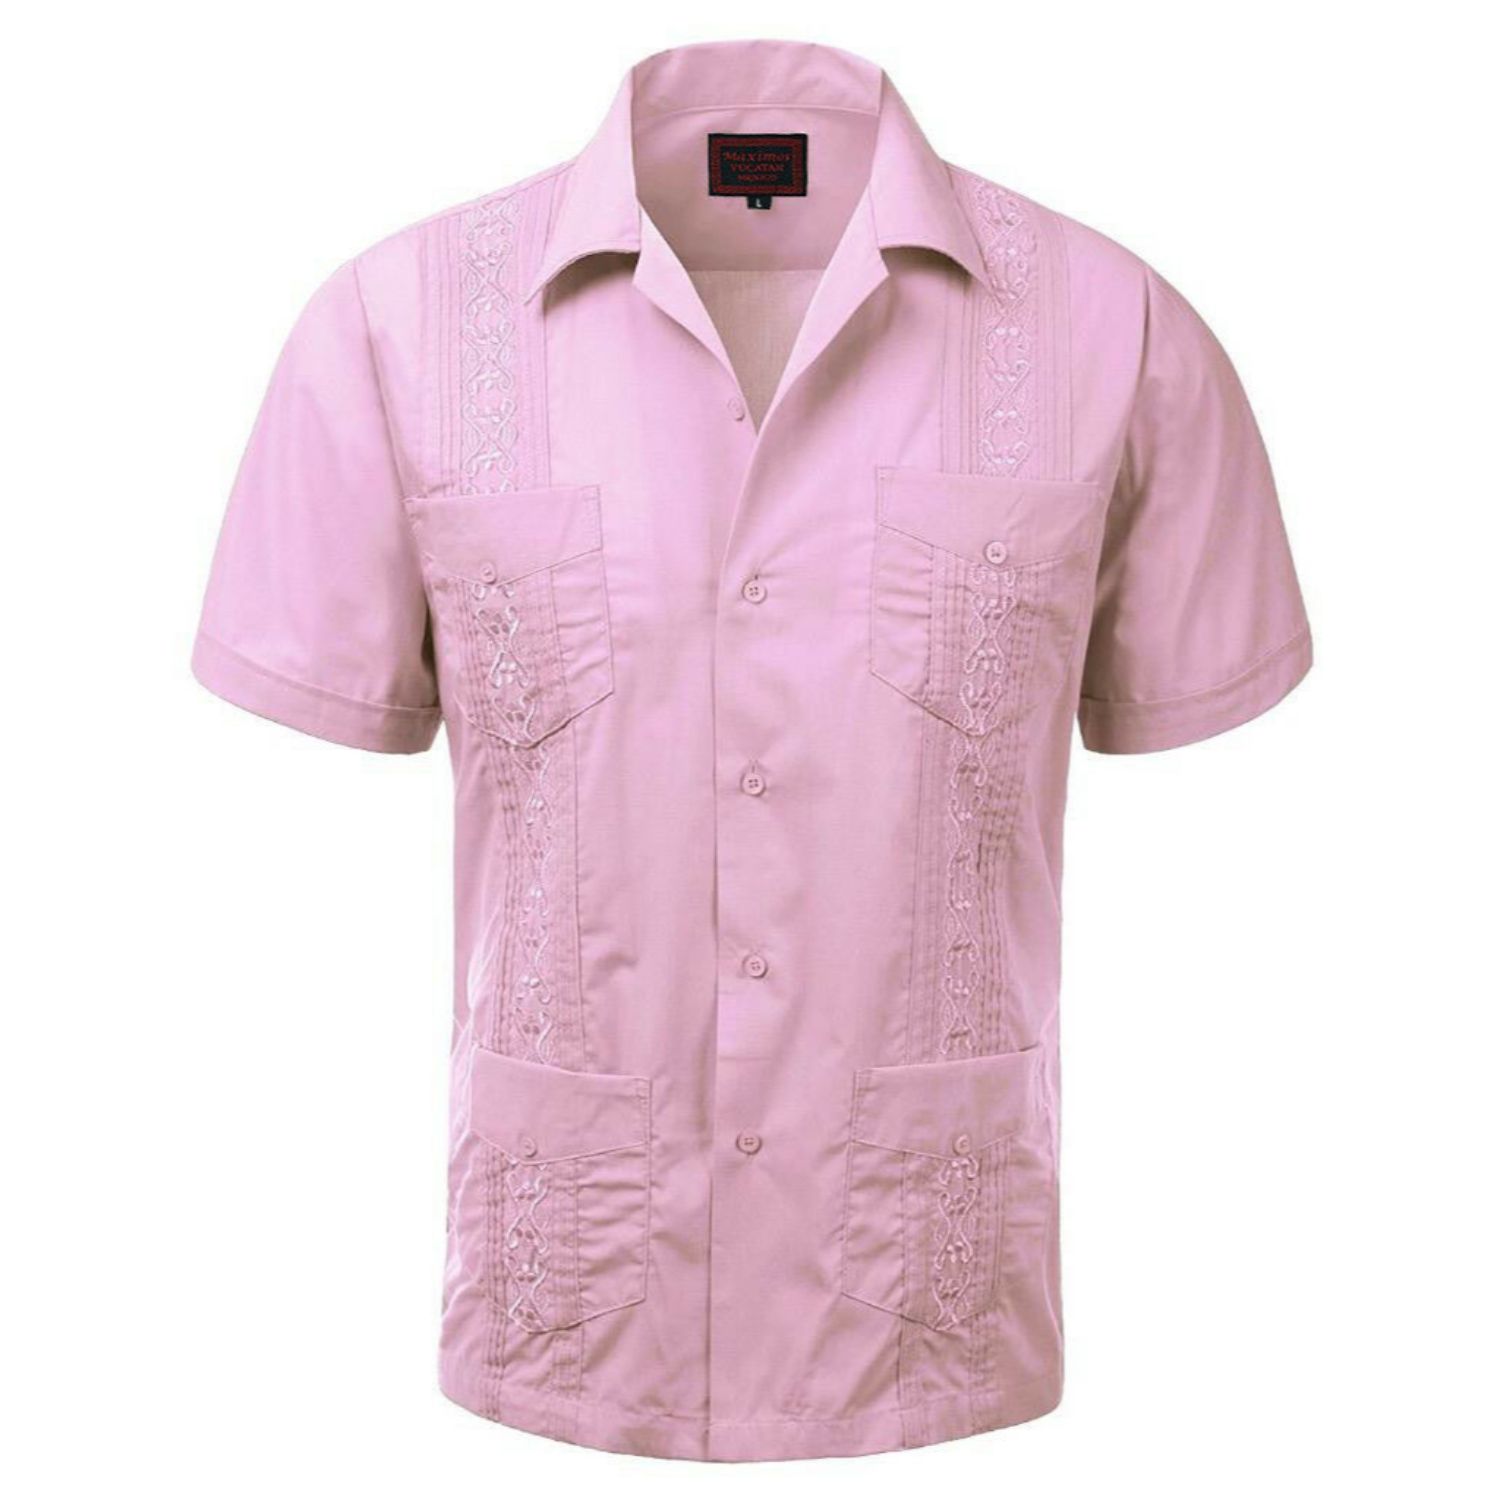 Maximos Men's Guayabera Summer Casual Cuban Beach Wedding Vacation Short Sleeve Button-up Casual Dress Shirt Pink M - image 1 of 1